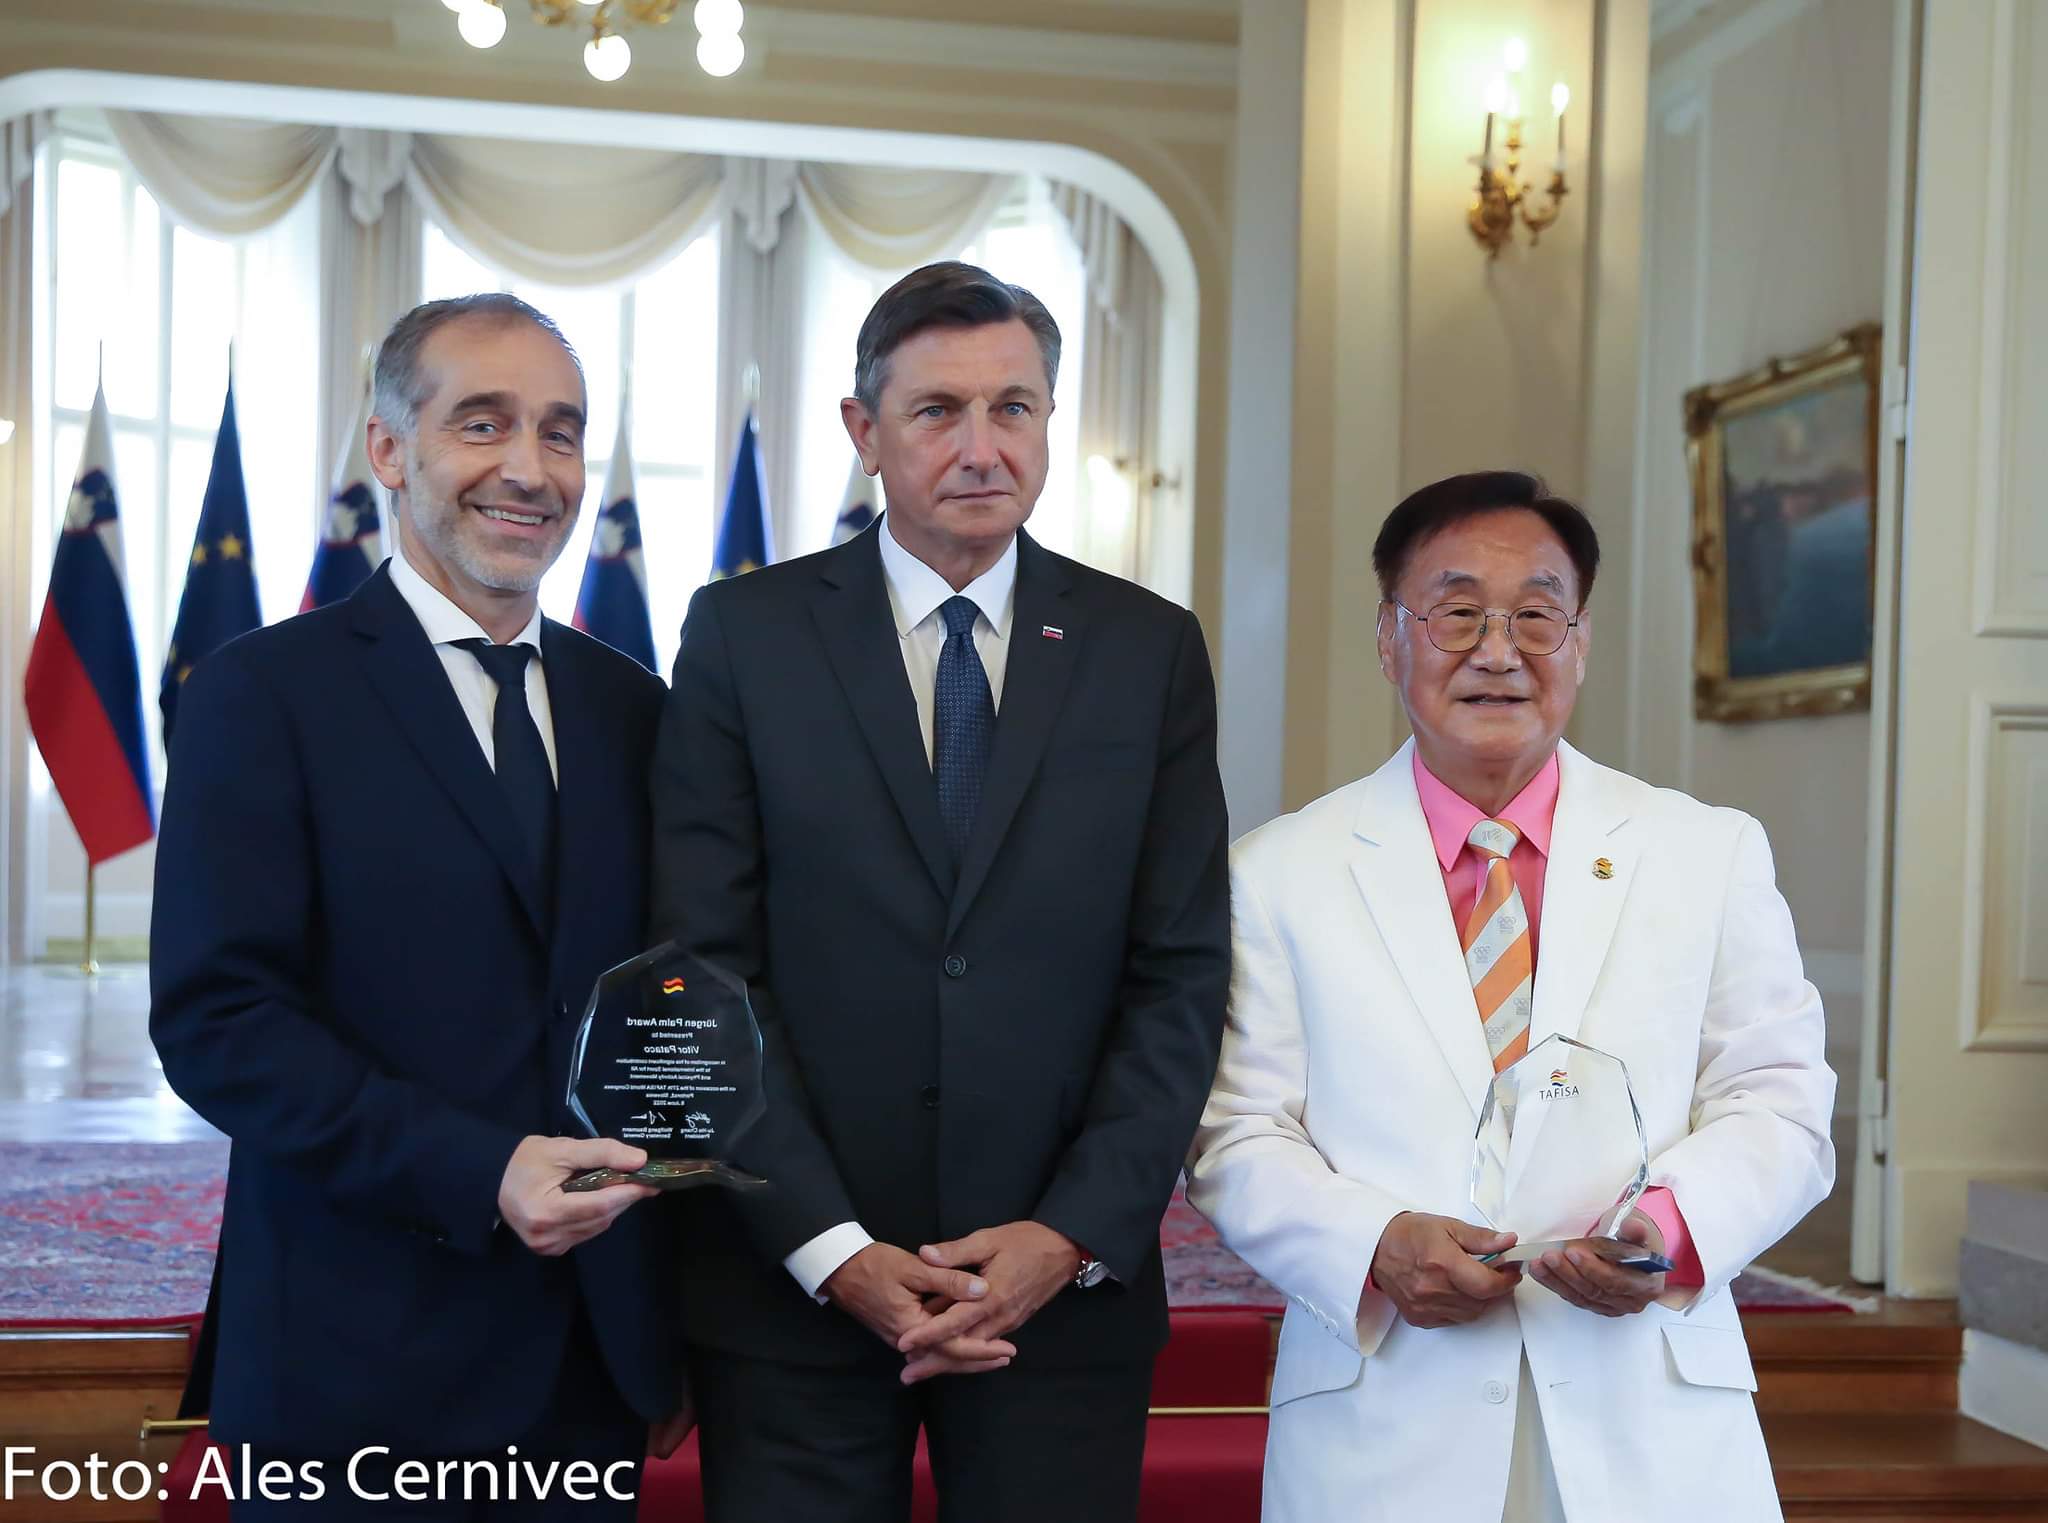 Presidente do IPDJ, Vitor Pataco, recebe o Jürgen Palm Award, da TAFISA